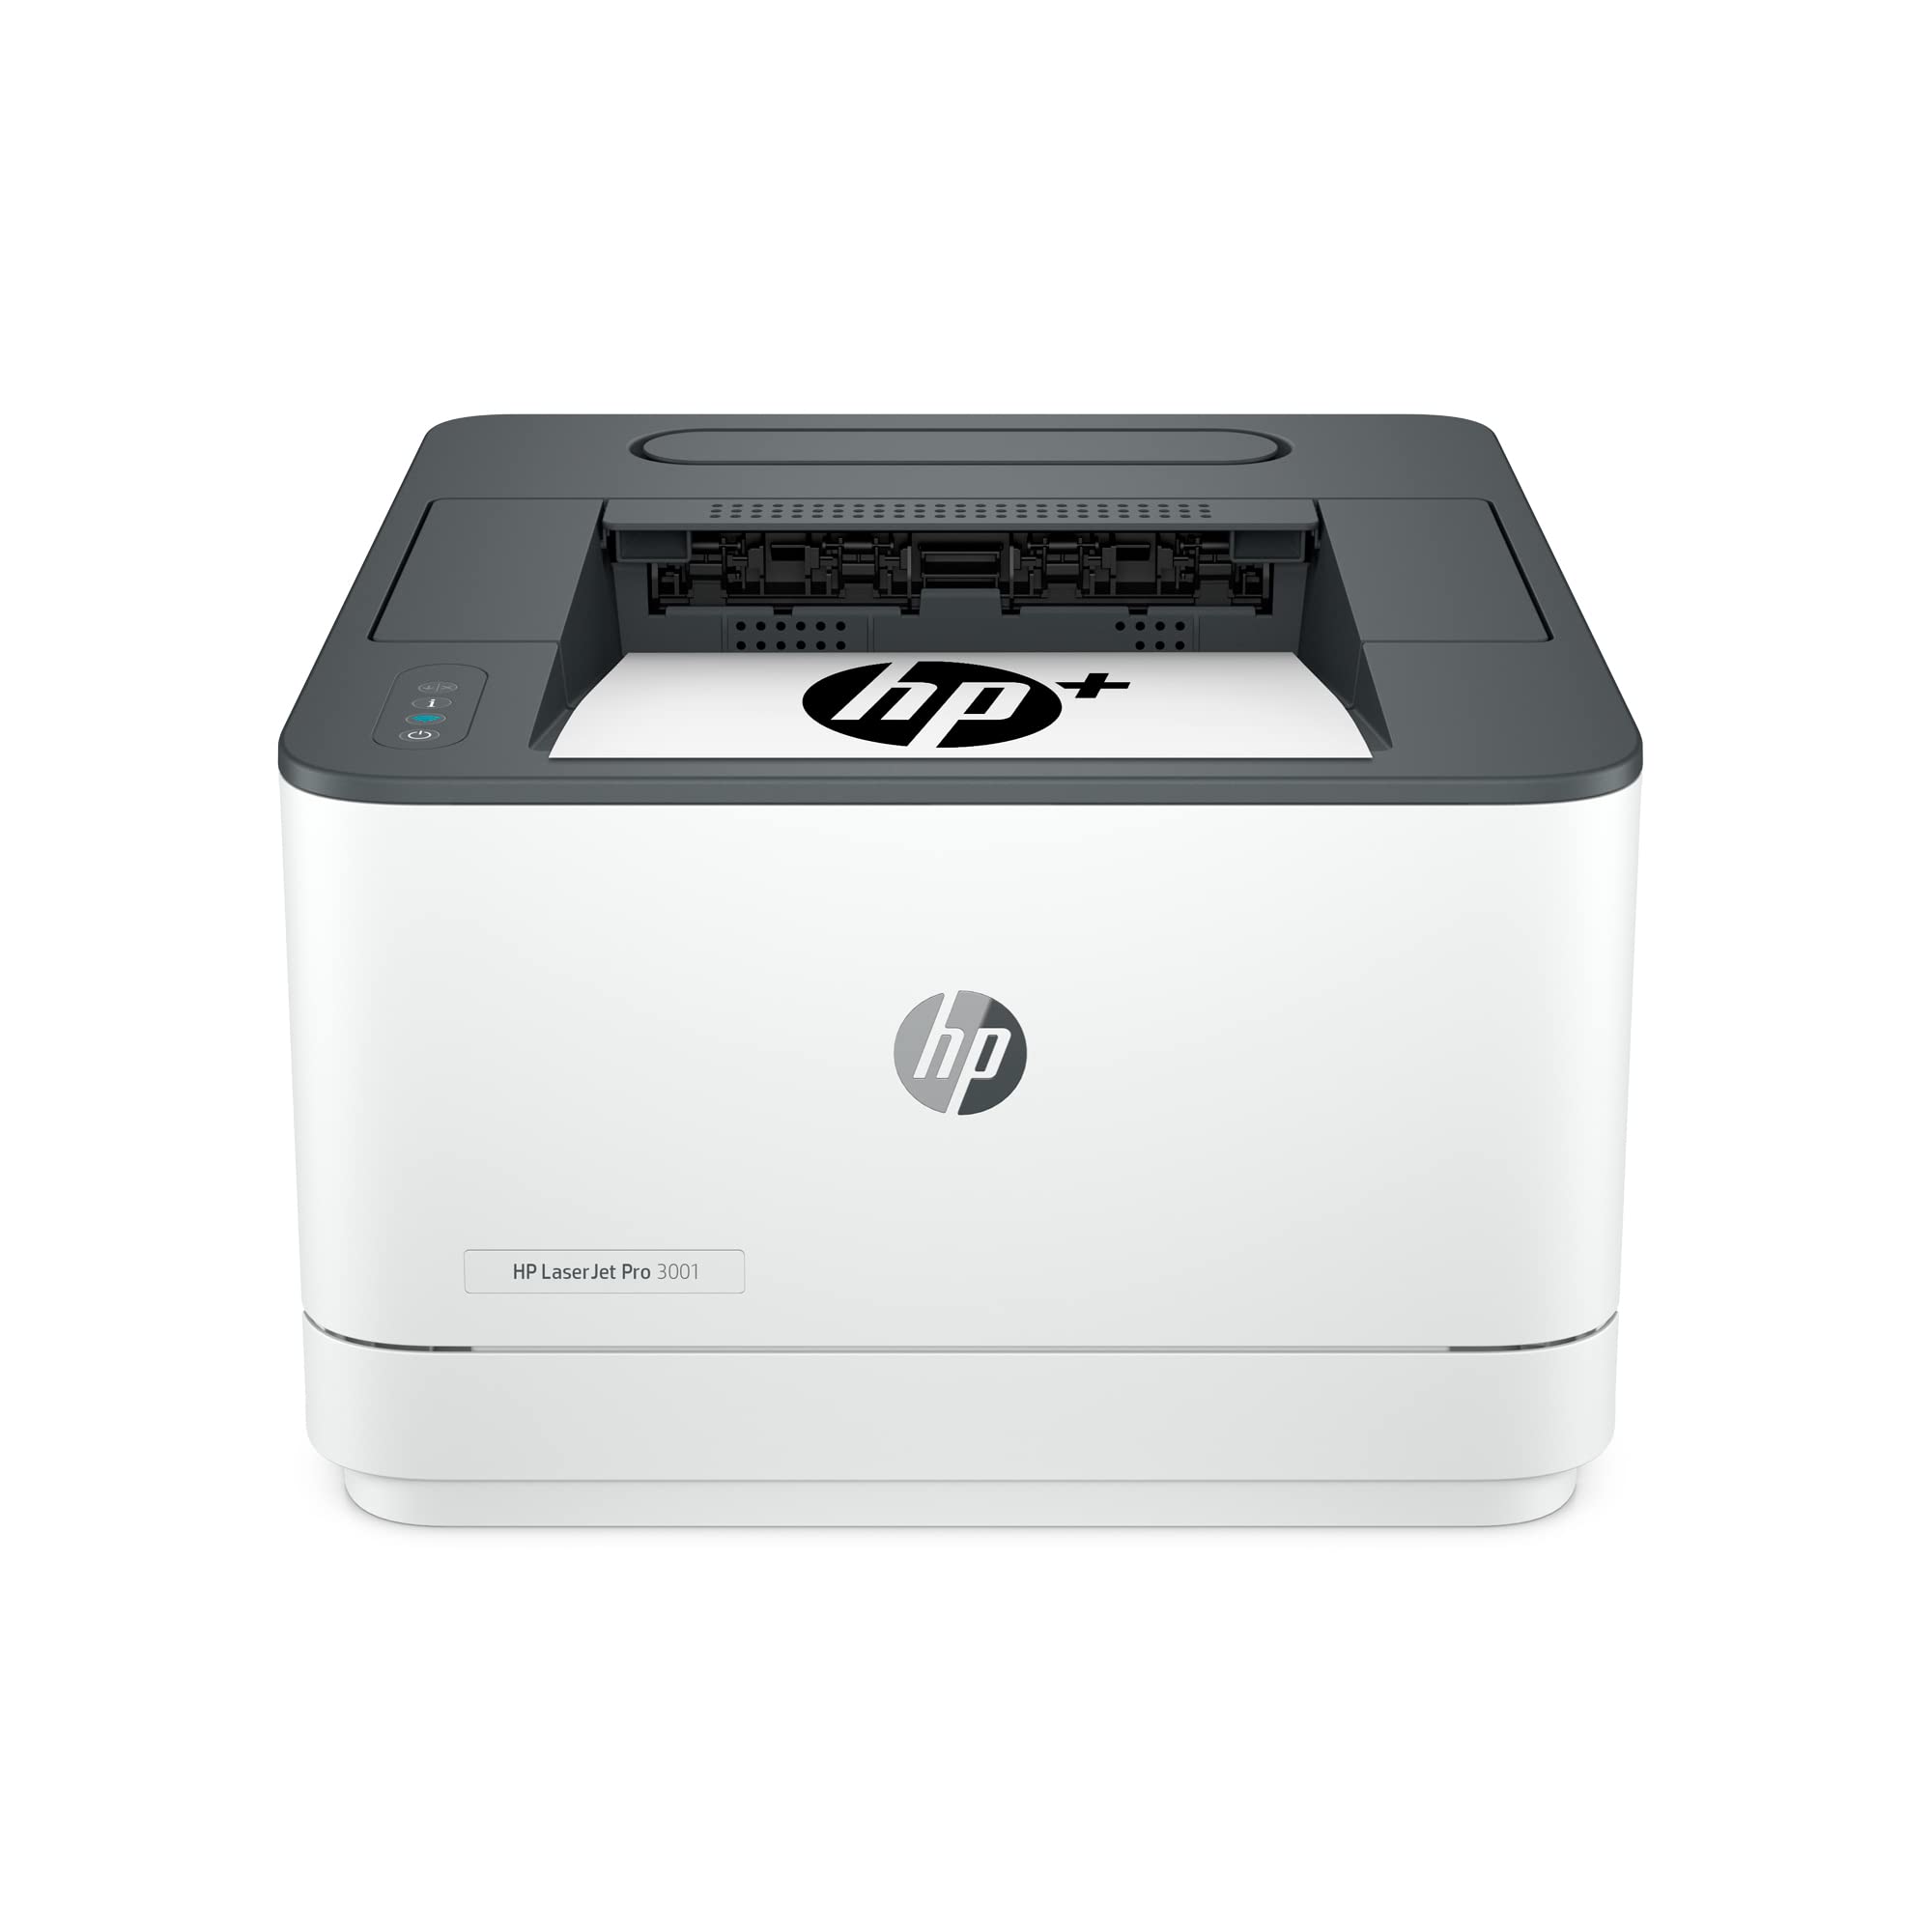 HP LaserJet Pro 3001dwe Wireless Black & White Printer with + Smart Office Features